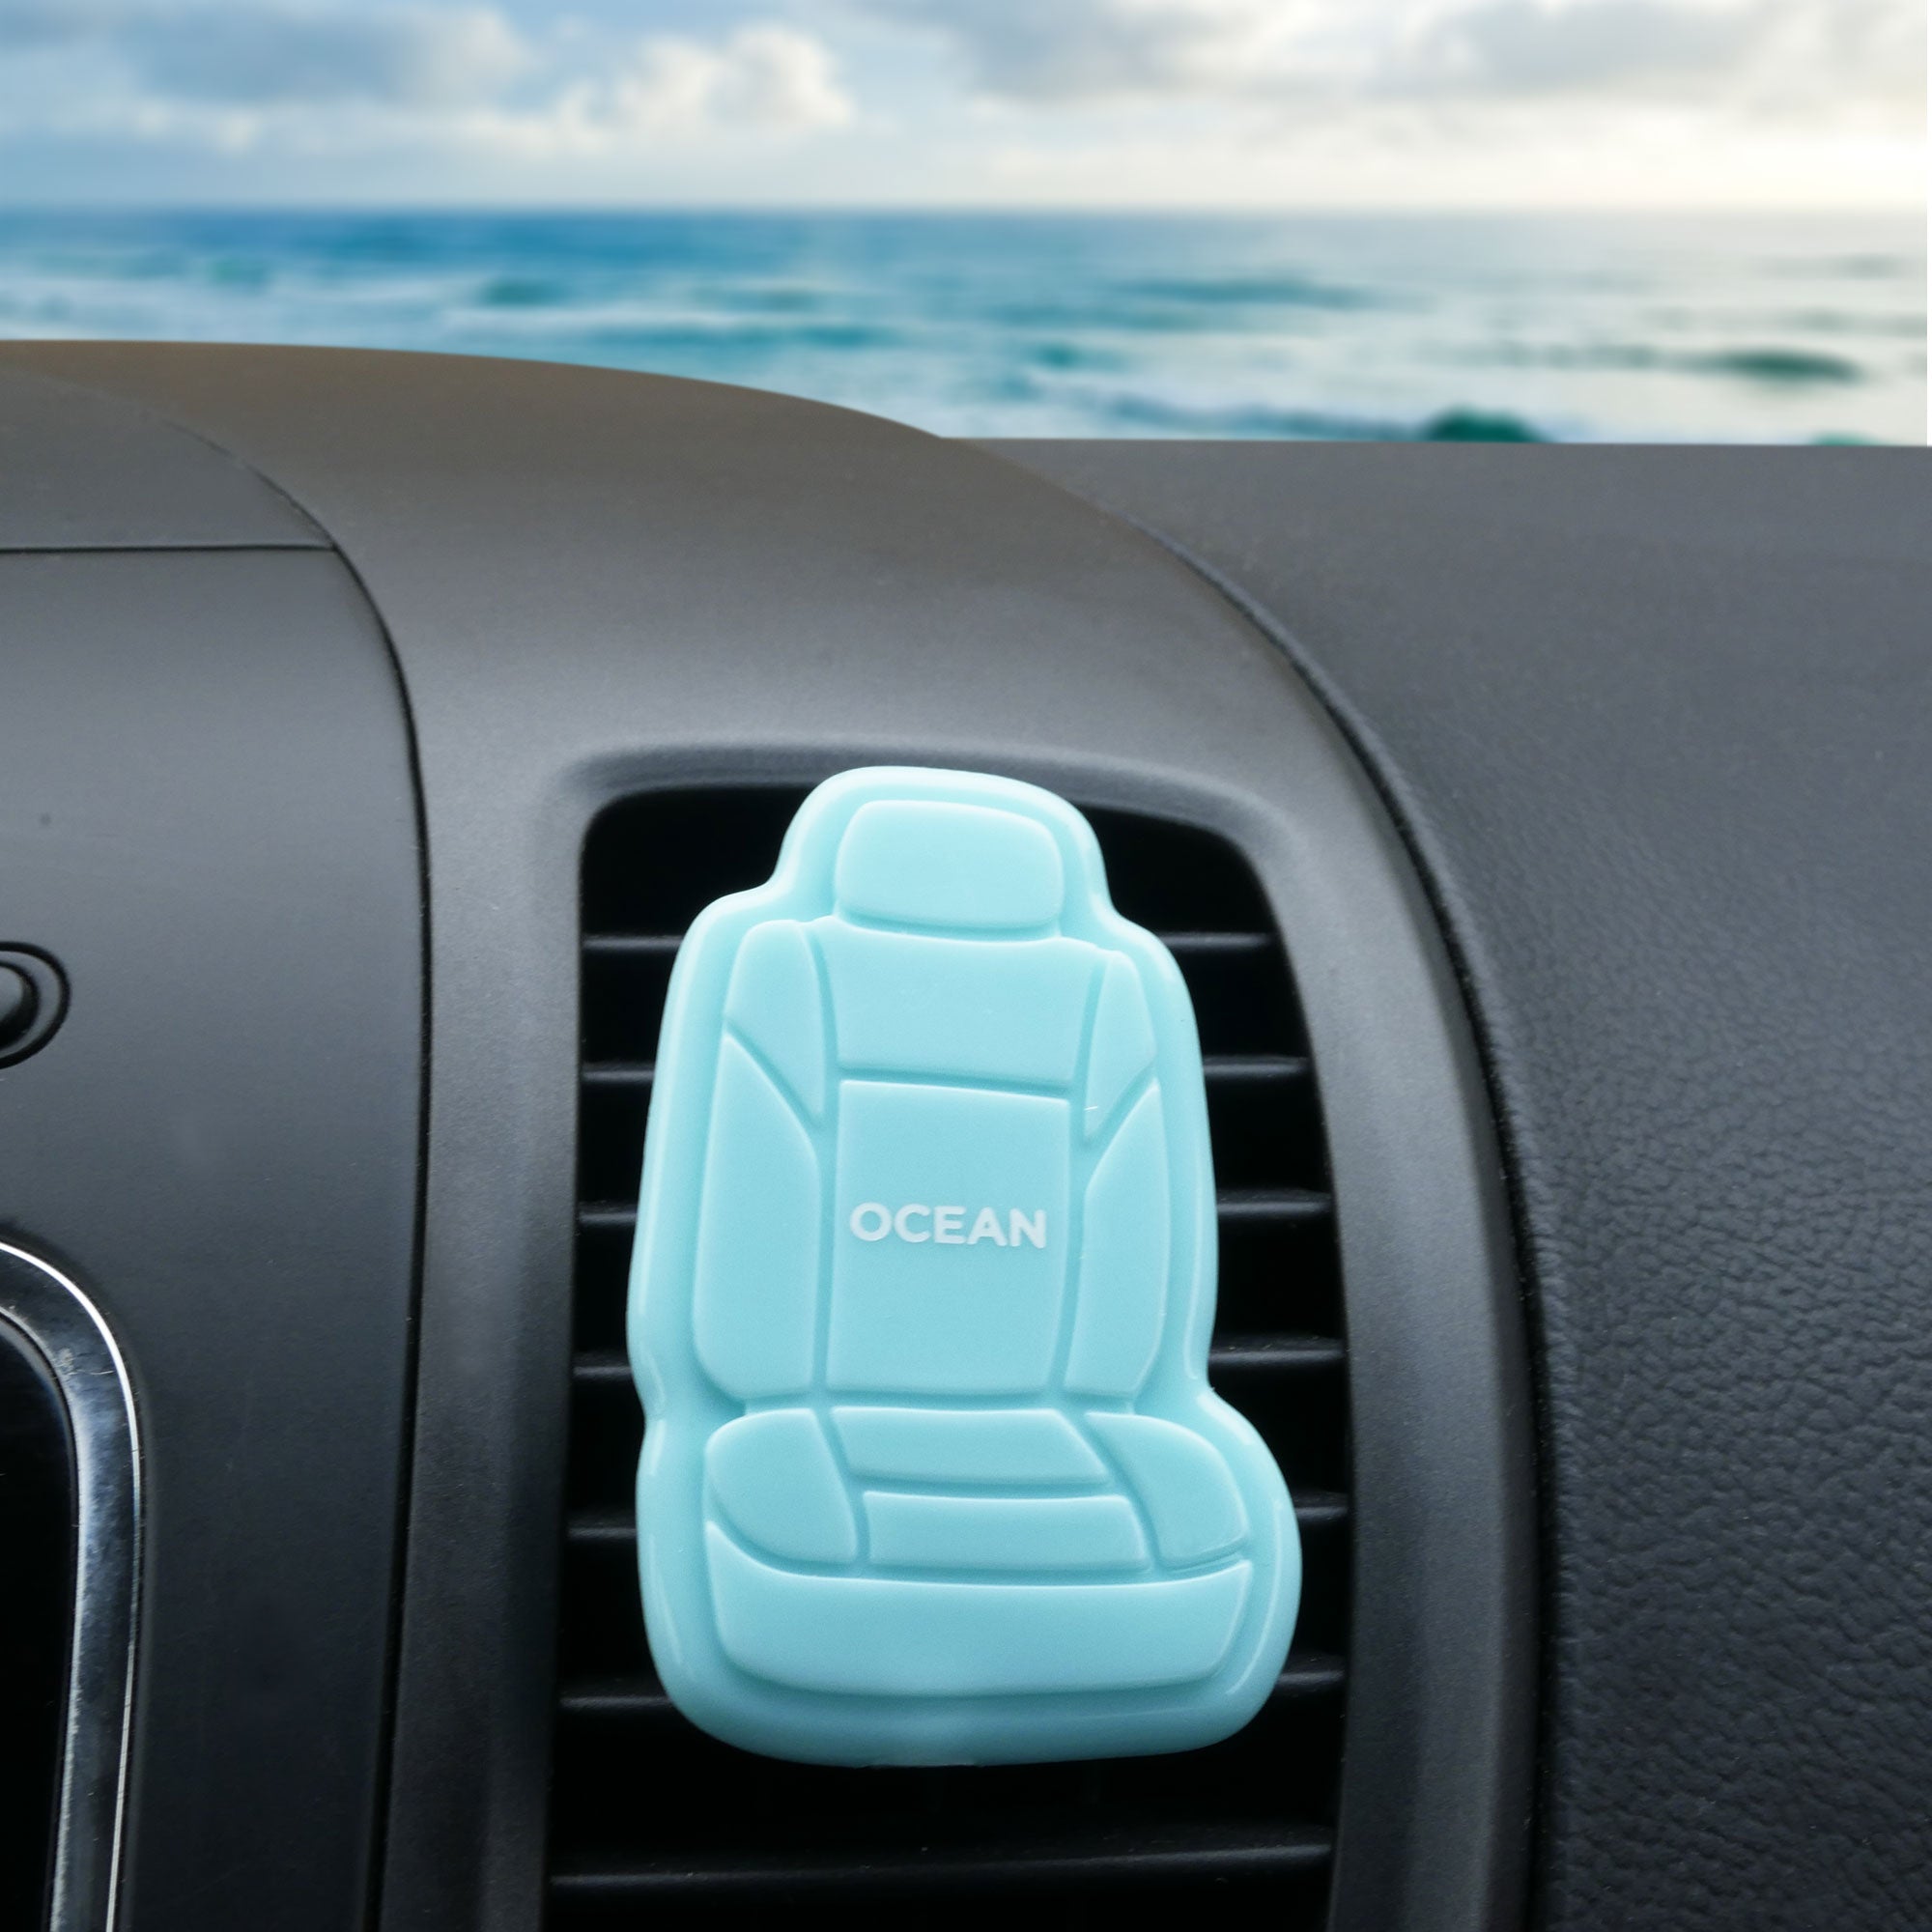 FH Group Ergonomic Cooling Gel Car Seat Cushion with Bonus Air Freshener, Blue